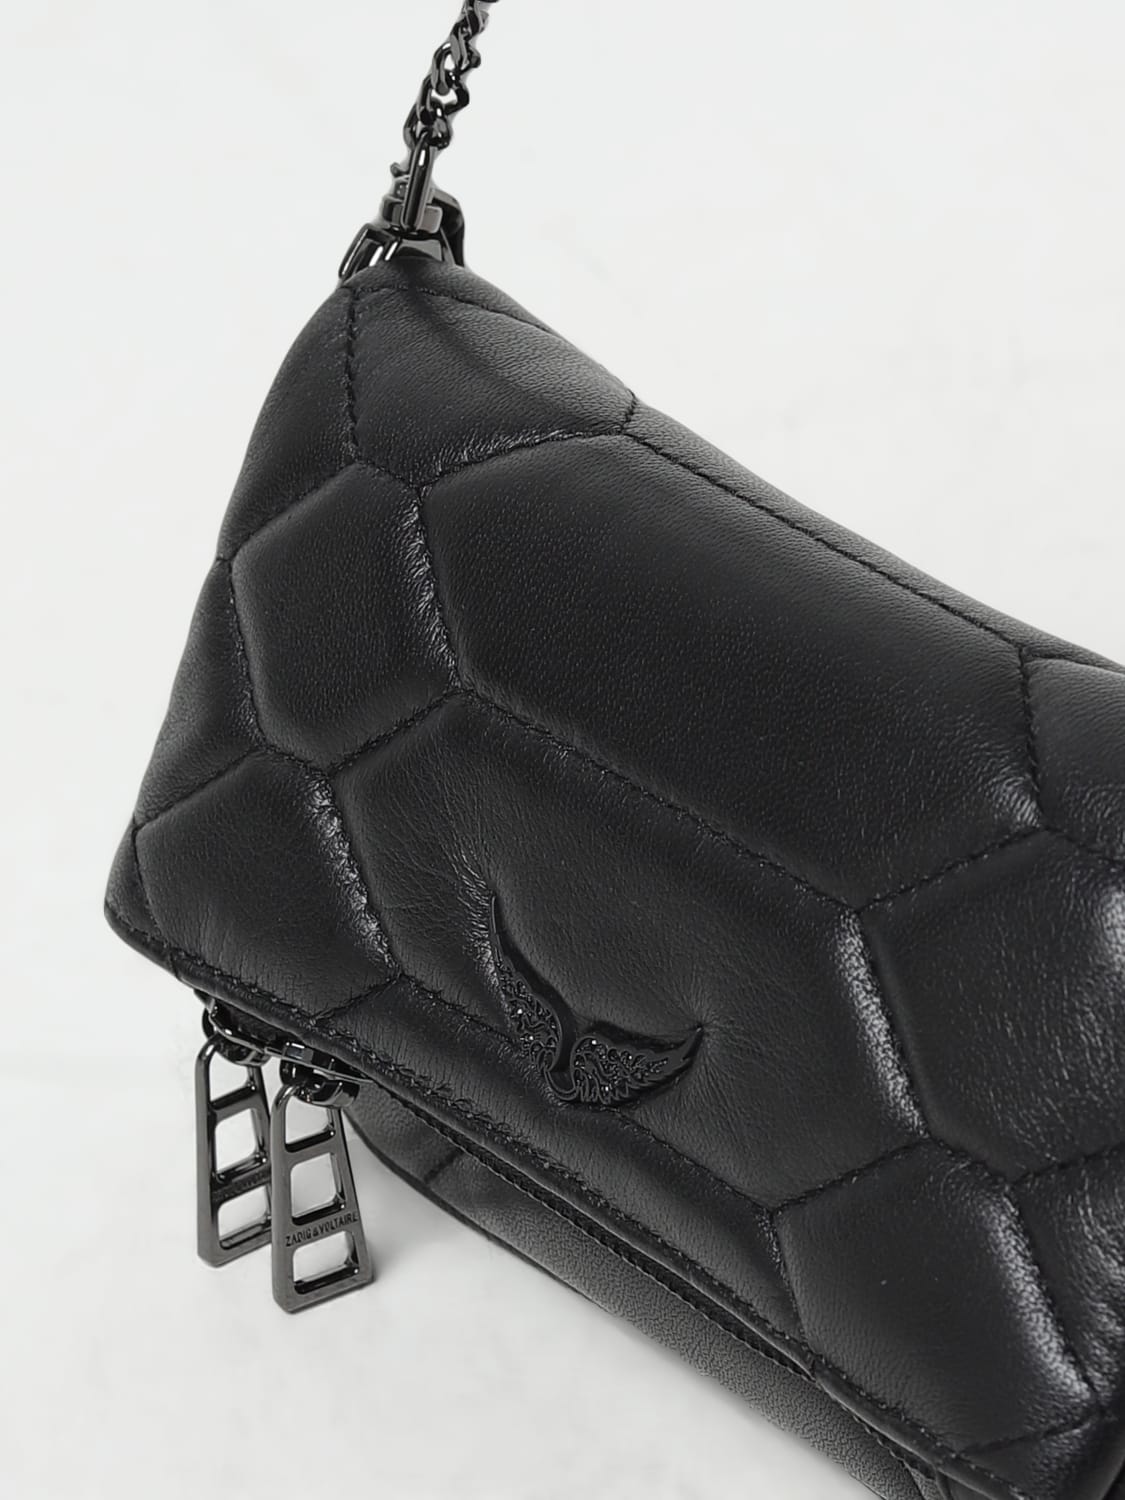 Voltaire Louis Vuitton Handbags for Women - Vestiaire Collective